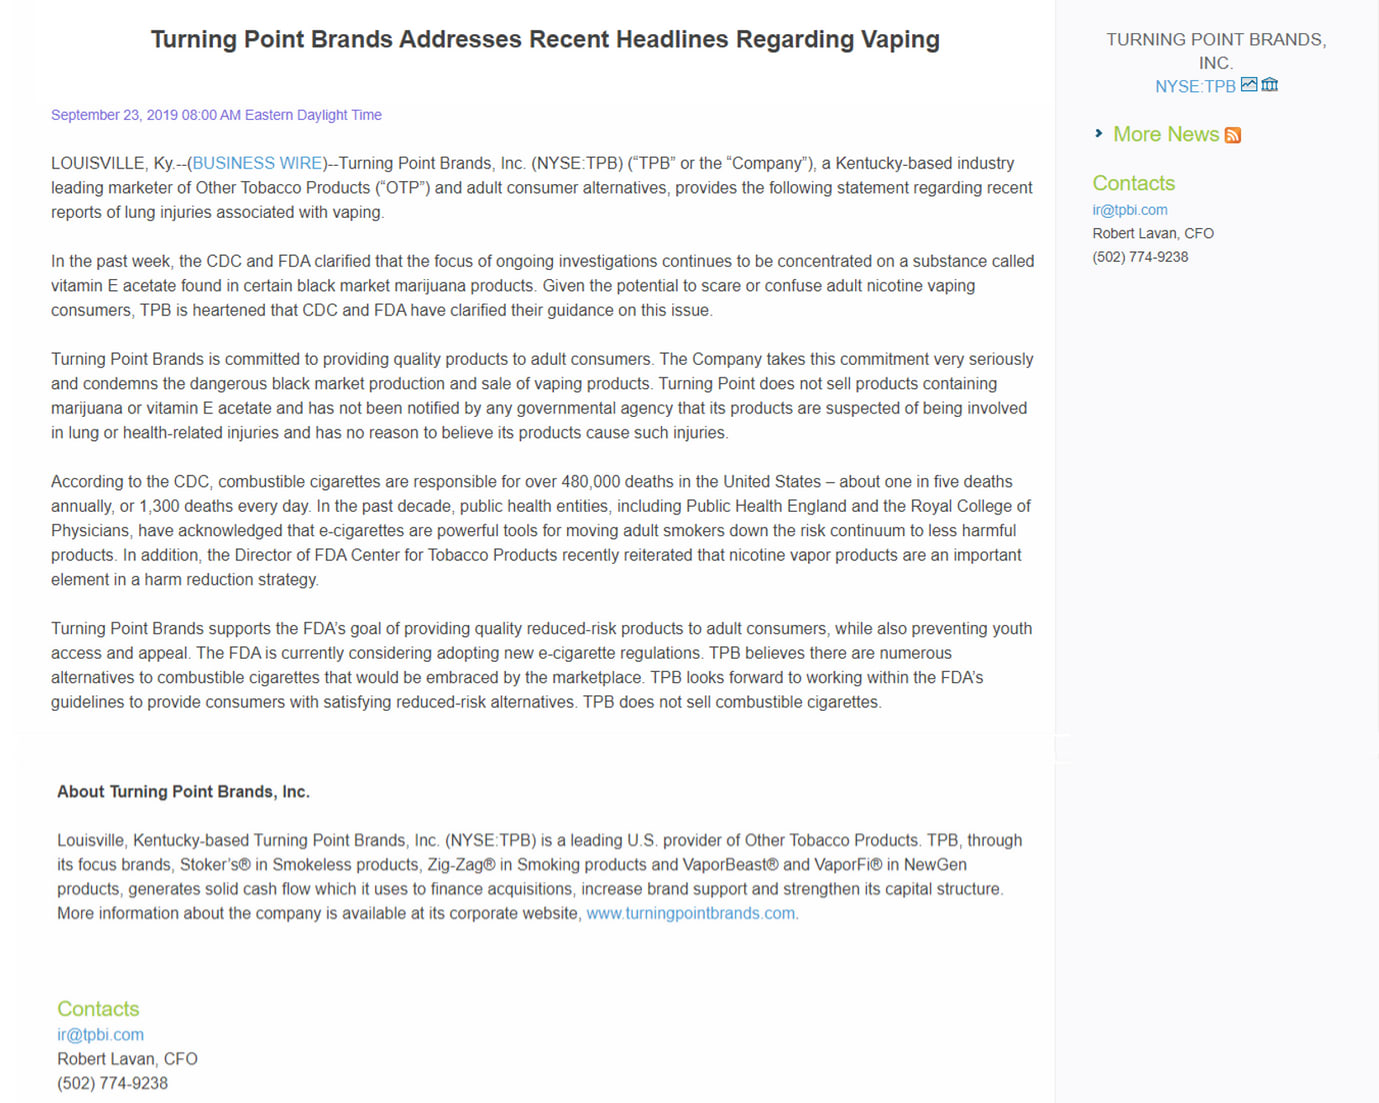 TPB addresses recent headlines regarding vaping